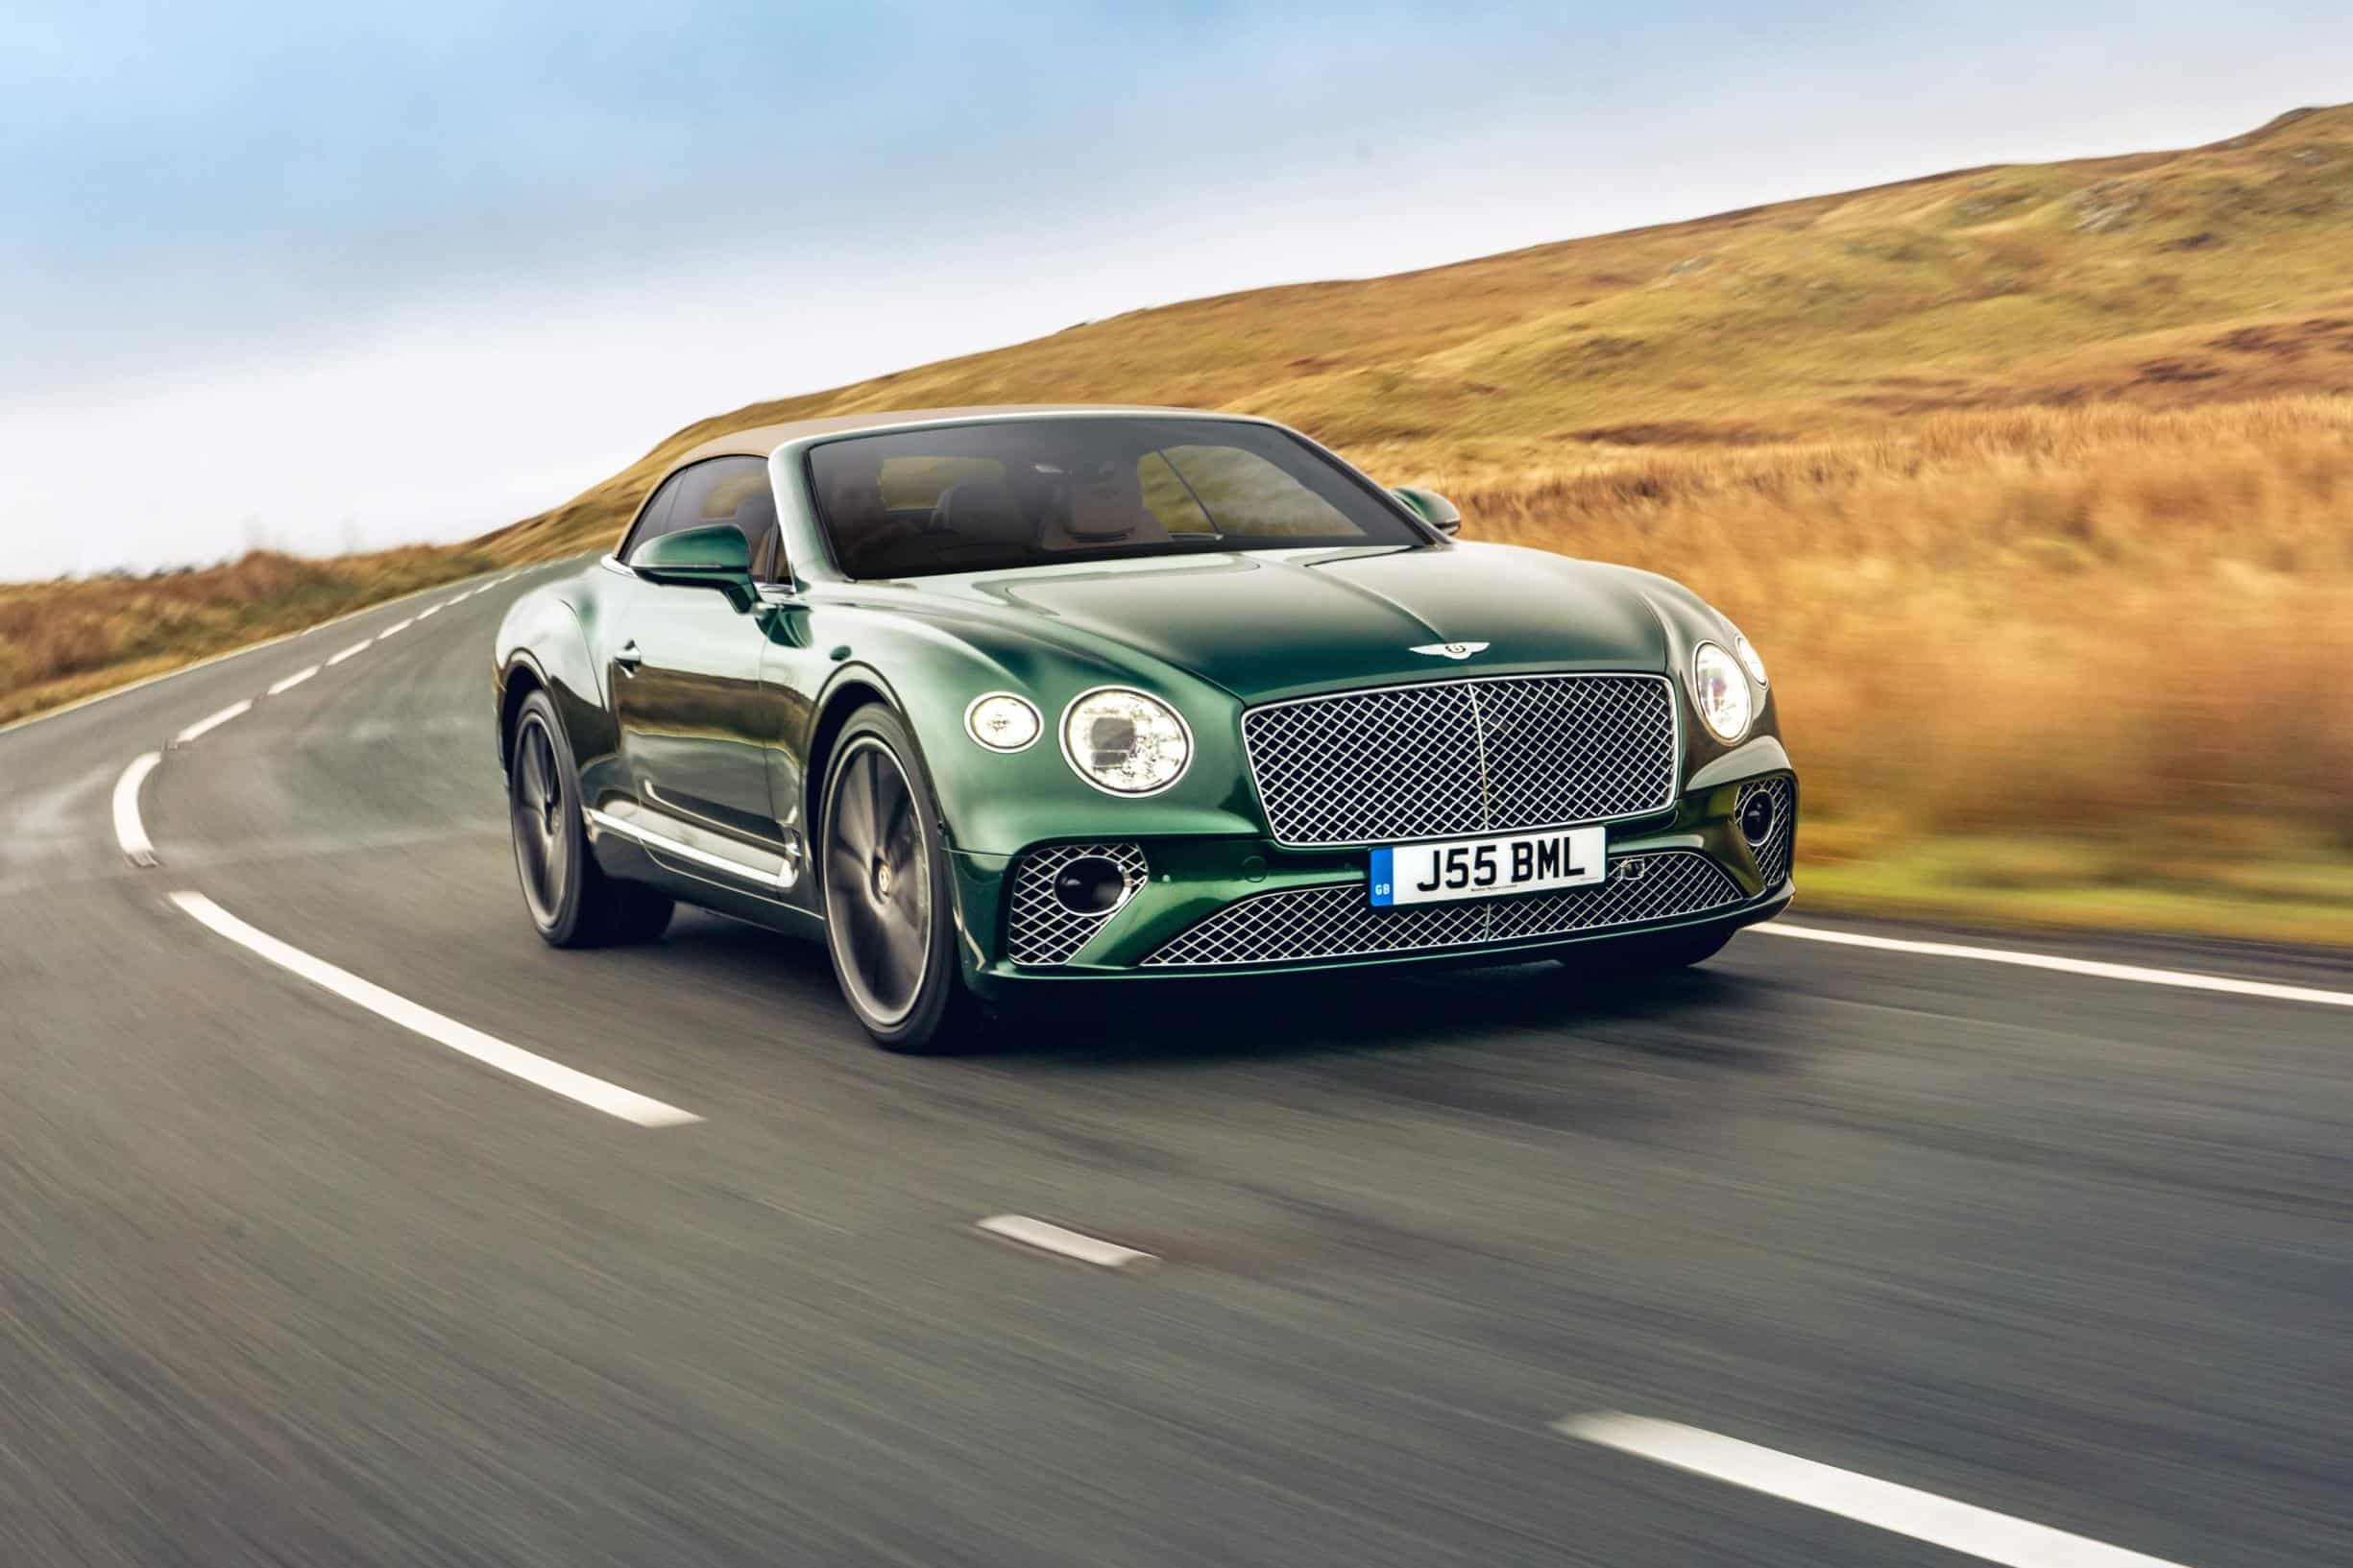 Bentley upgrades its entire portfolio with an all-new tweed interior option